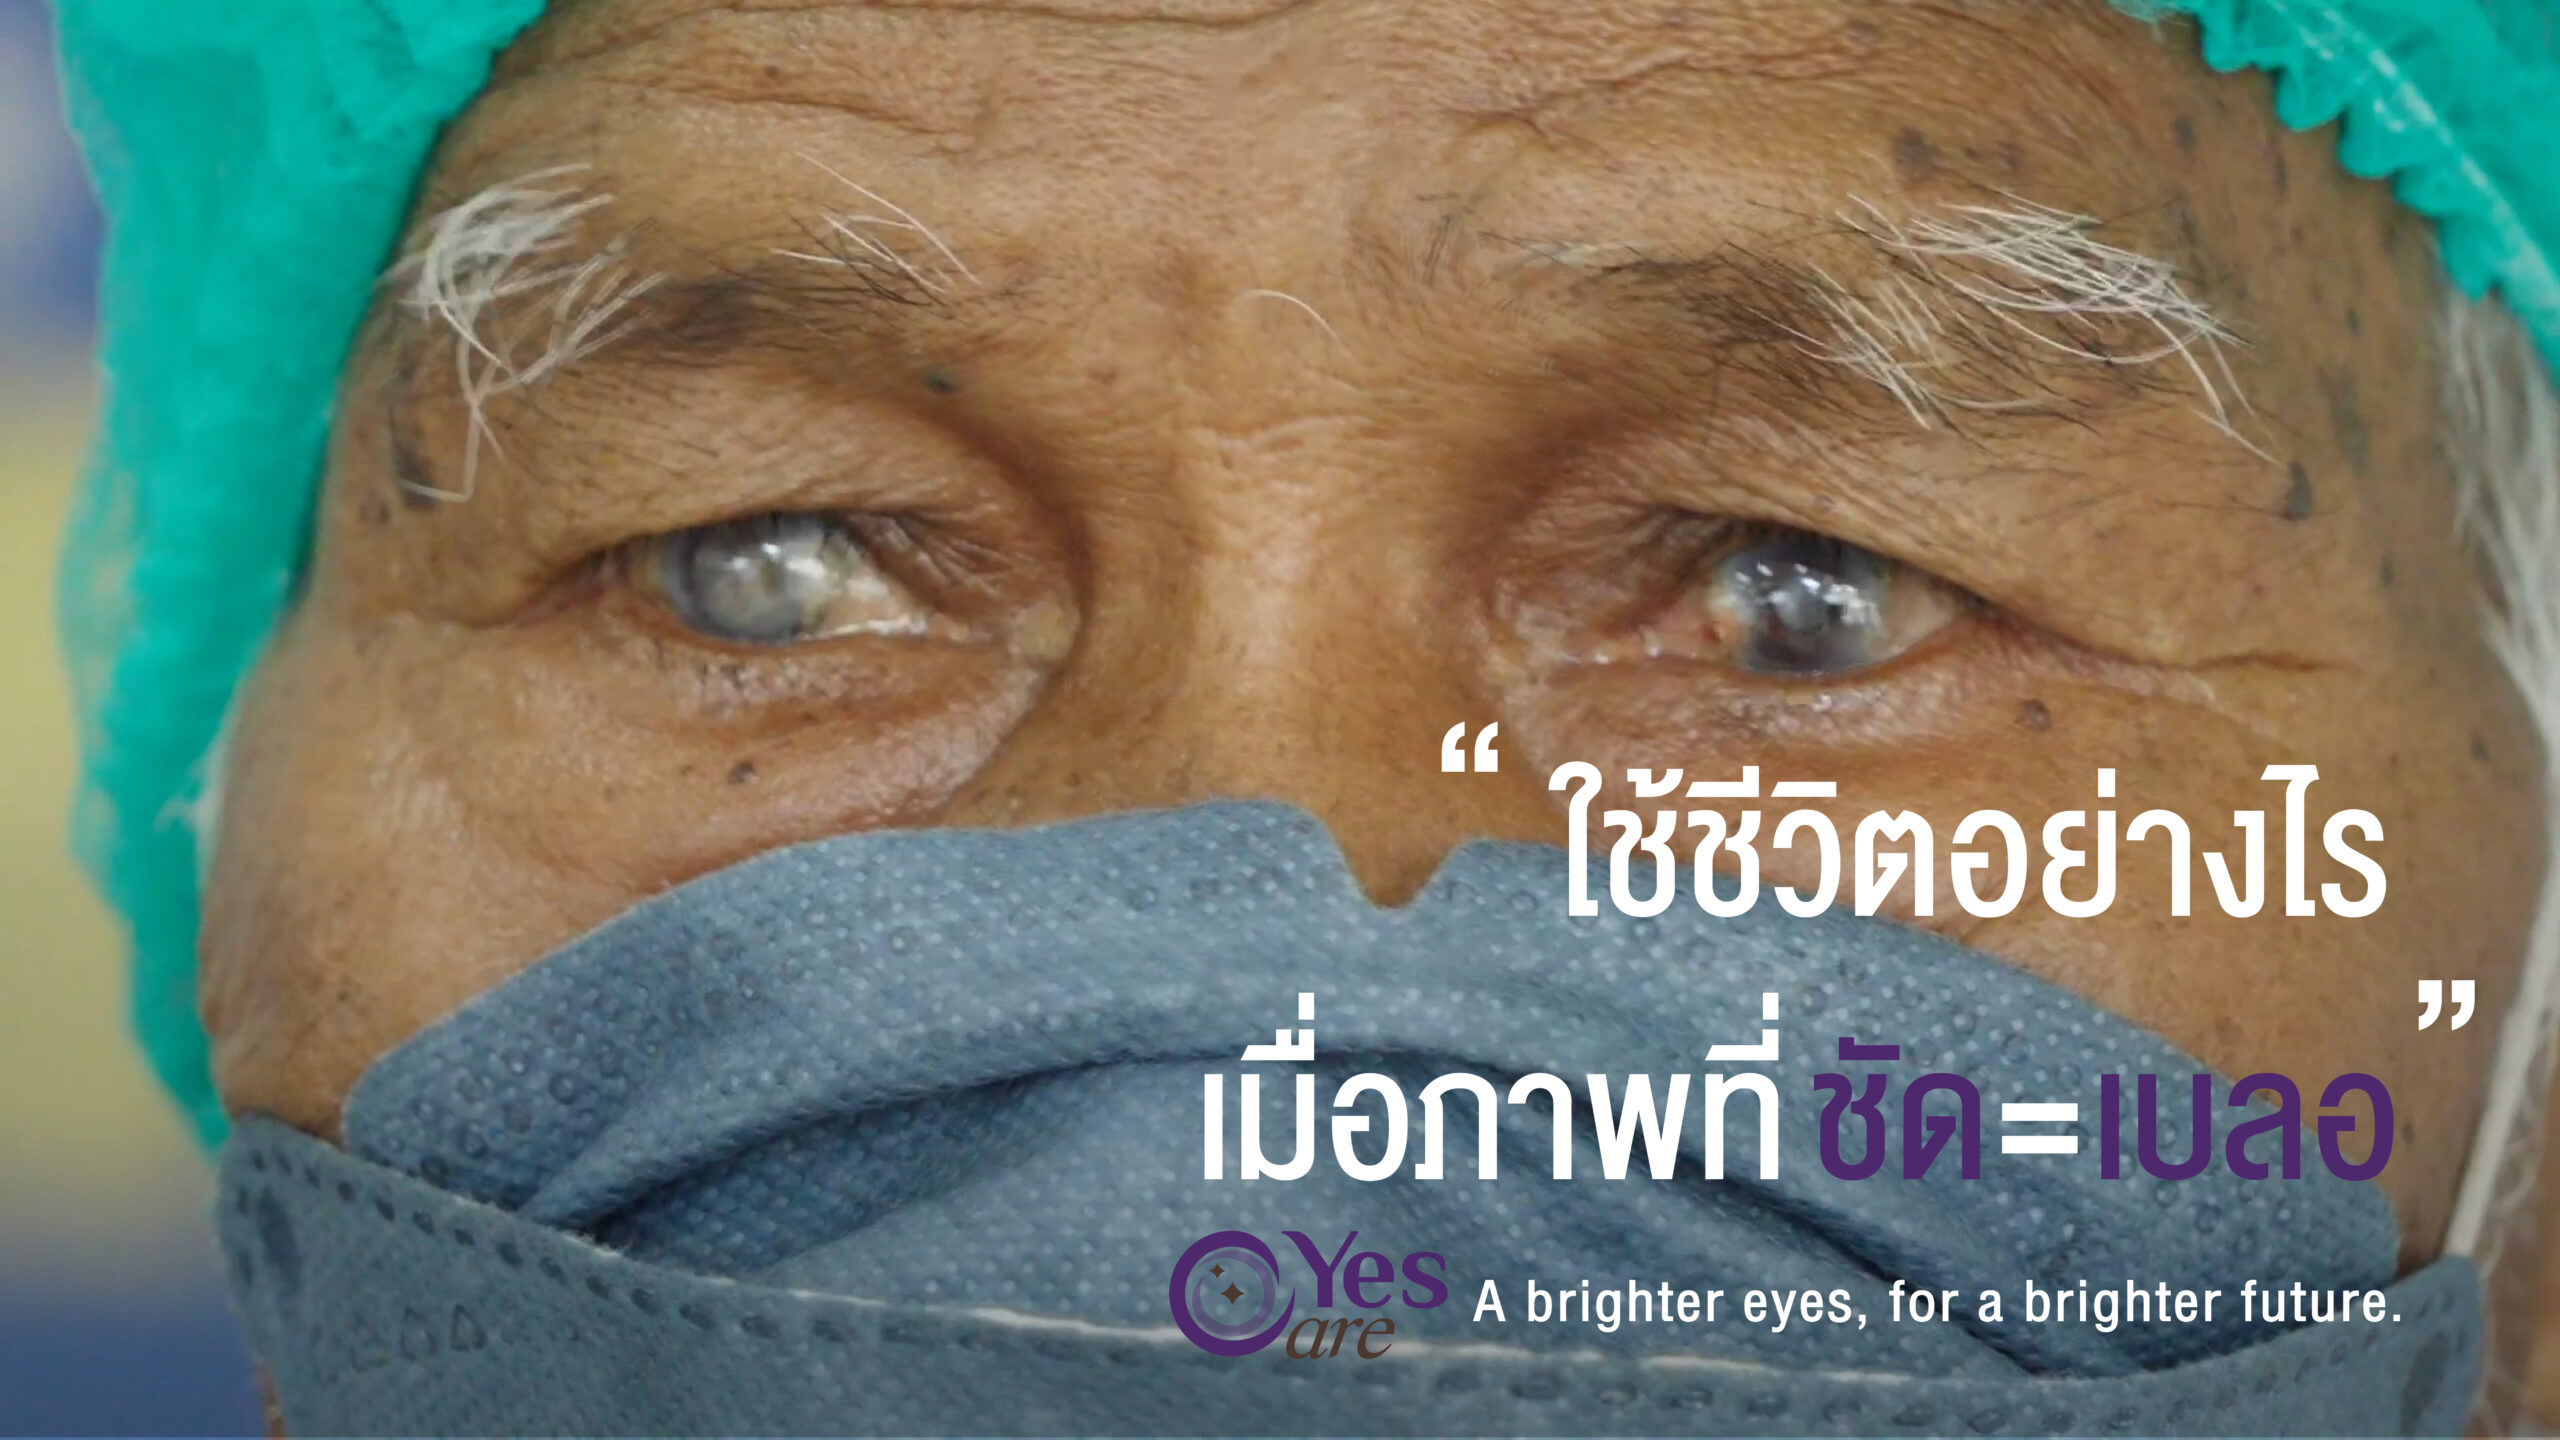  YesCare สนับสนุนโครงการผ่าตัดต้อกระจกใส่เลนส์แก้วตาเทียมแก่ผู้ยากไร้ในไทย กว่า 140 ราย